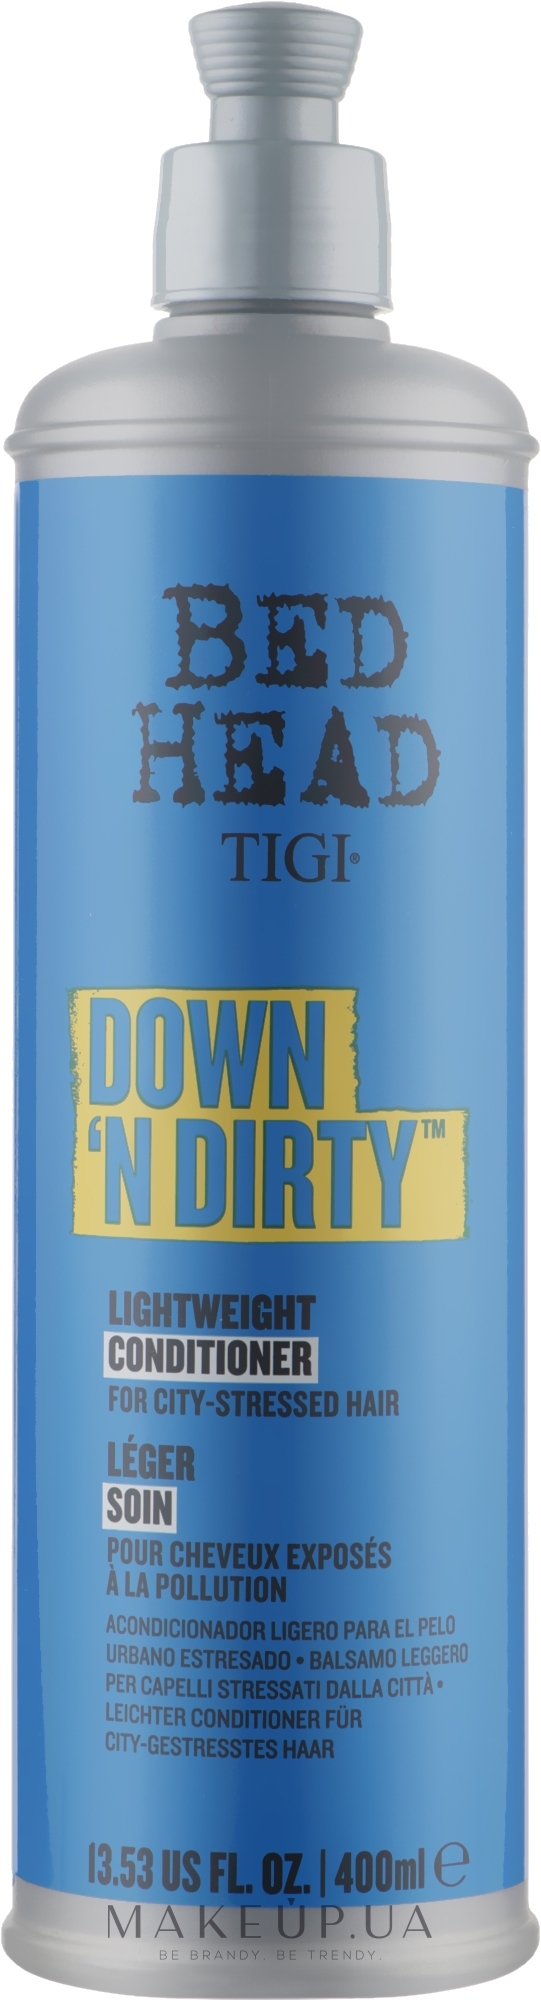 Кондиционер-детокс для волос - Tigi Bad Head Down N ’Dirty Conditioner — фото 400ml